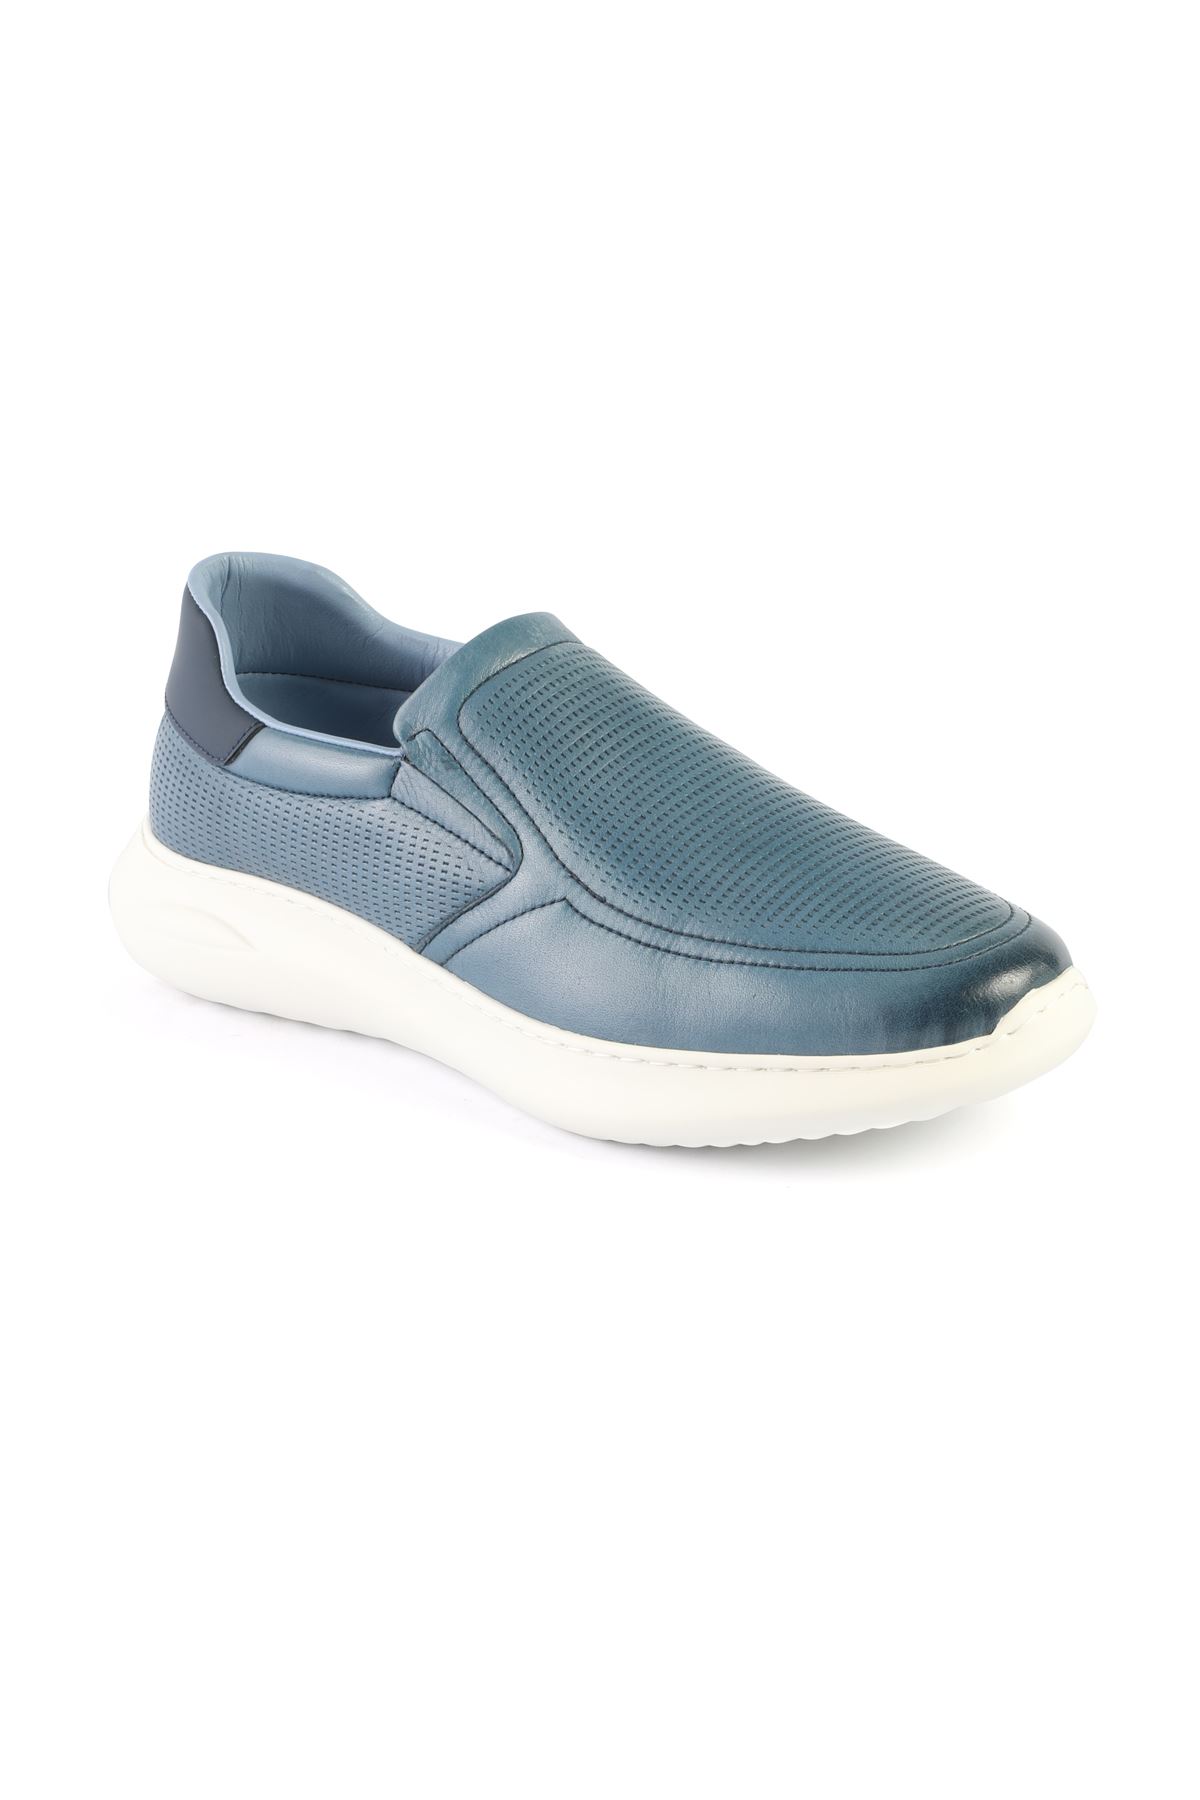 Libero L3413 Blue Sport Shoes